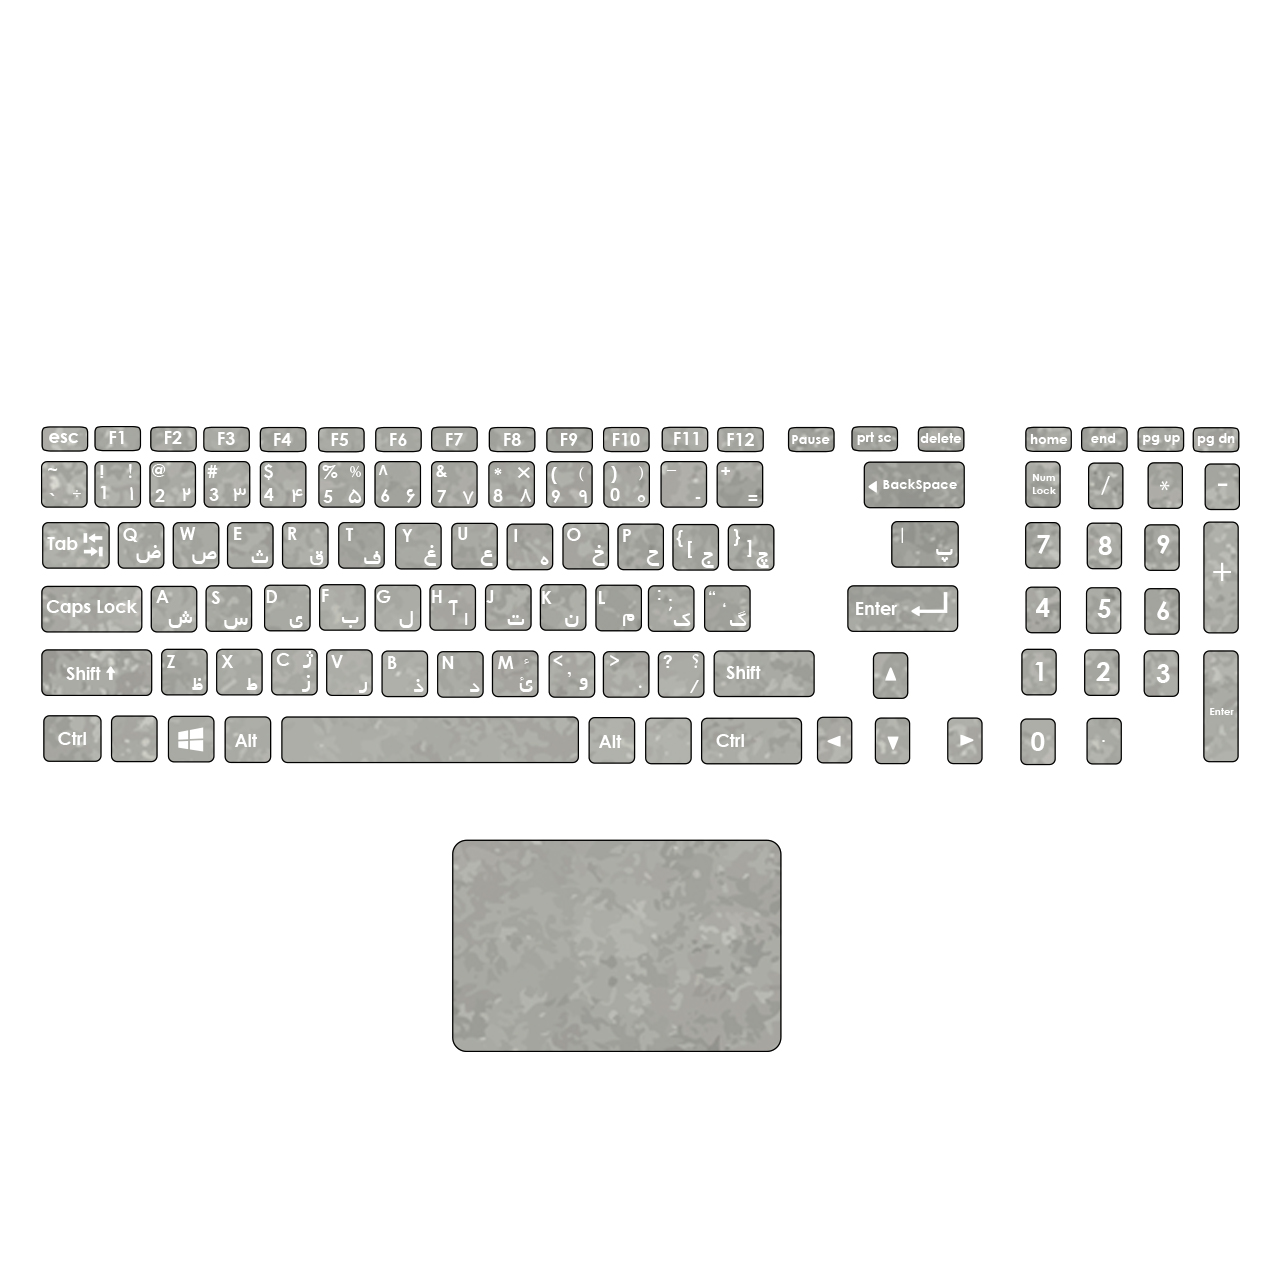 استیکر لپ تاپ صالسو آرت مدل mjr 1009 به همراه برچسب حروف فارسی کیبورد